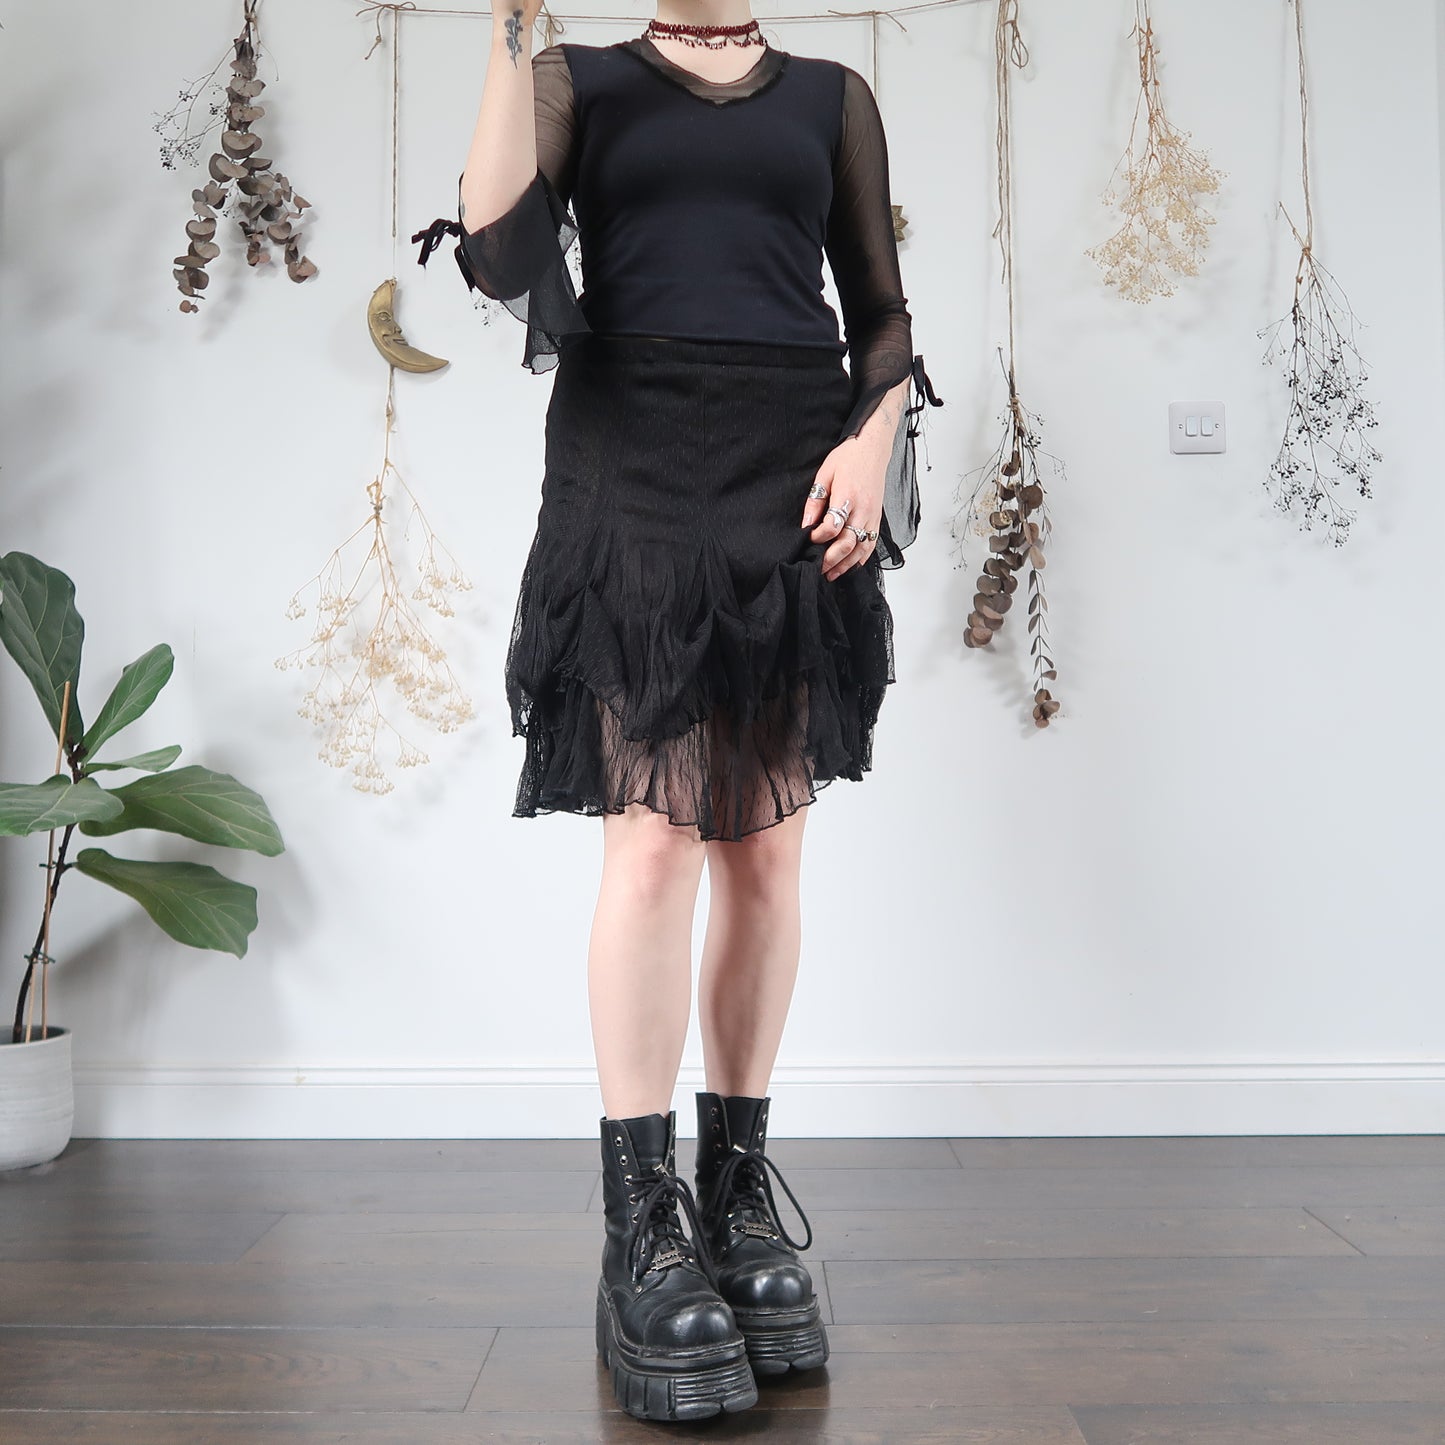 Black mesh skirt - size M/L